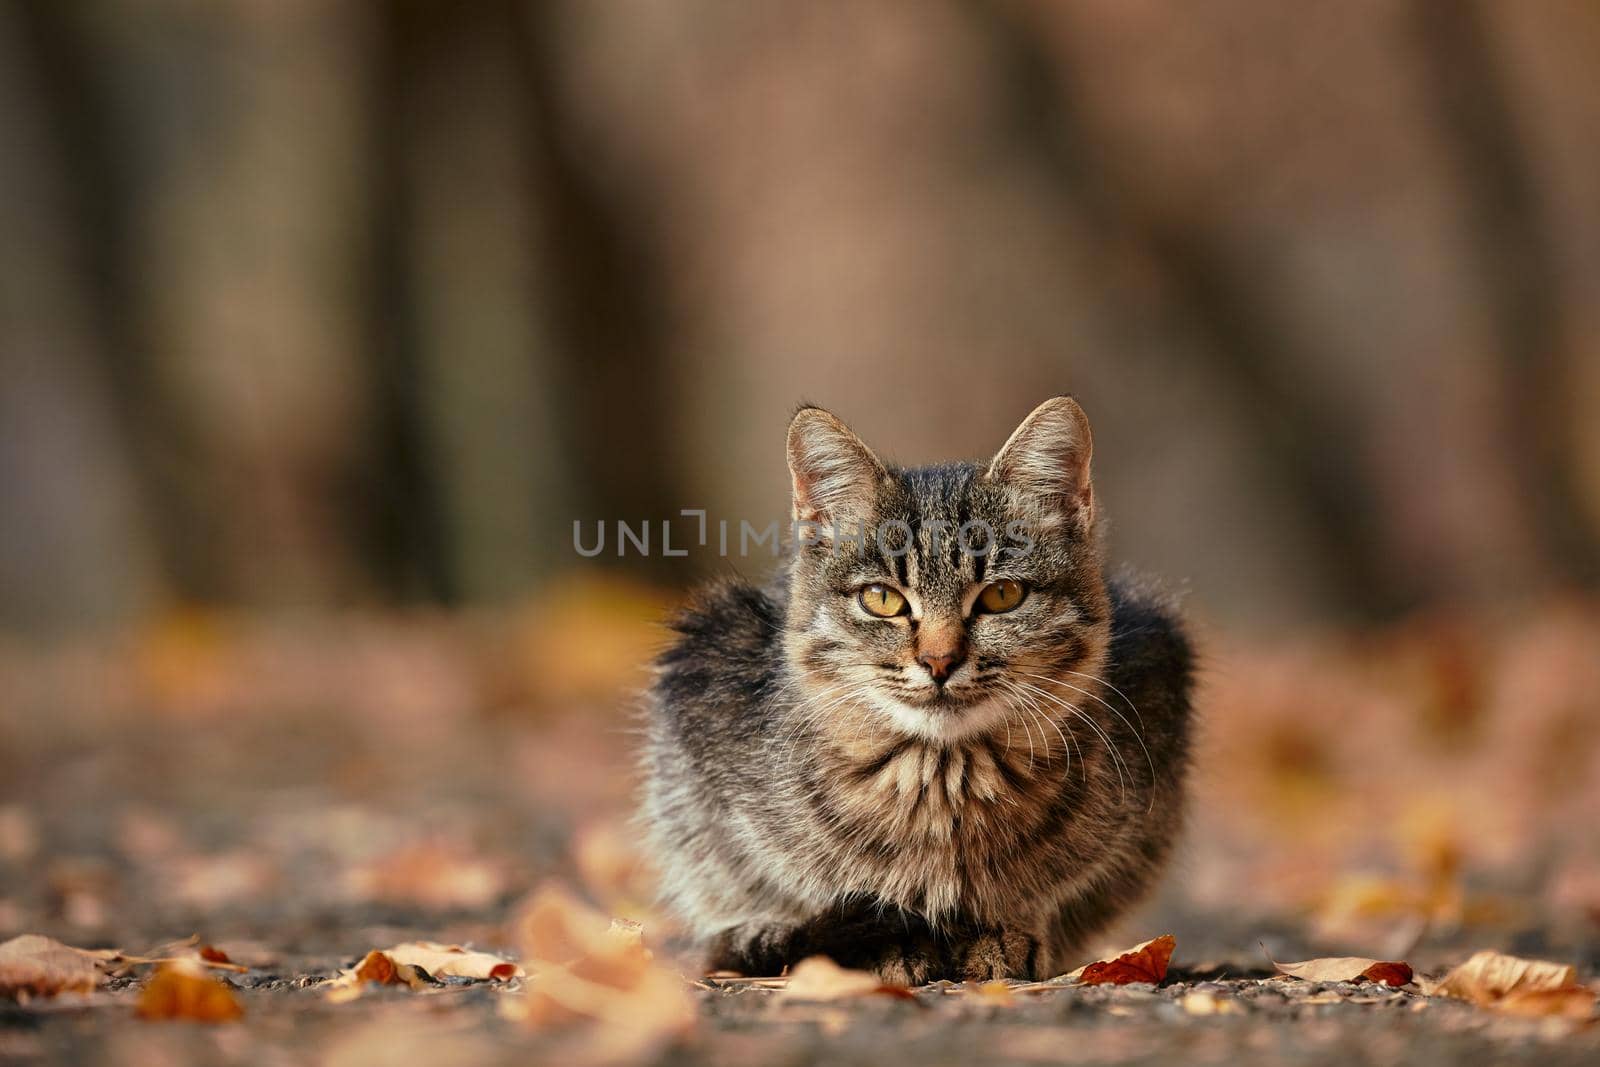 Beautiful kitten in the autumn Park. Cute fluffy cat